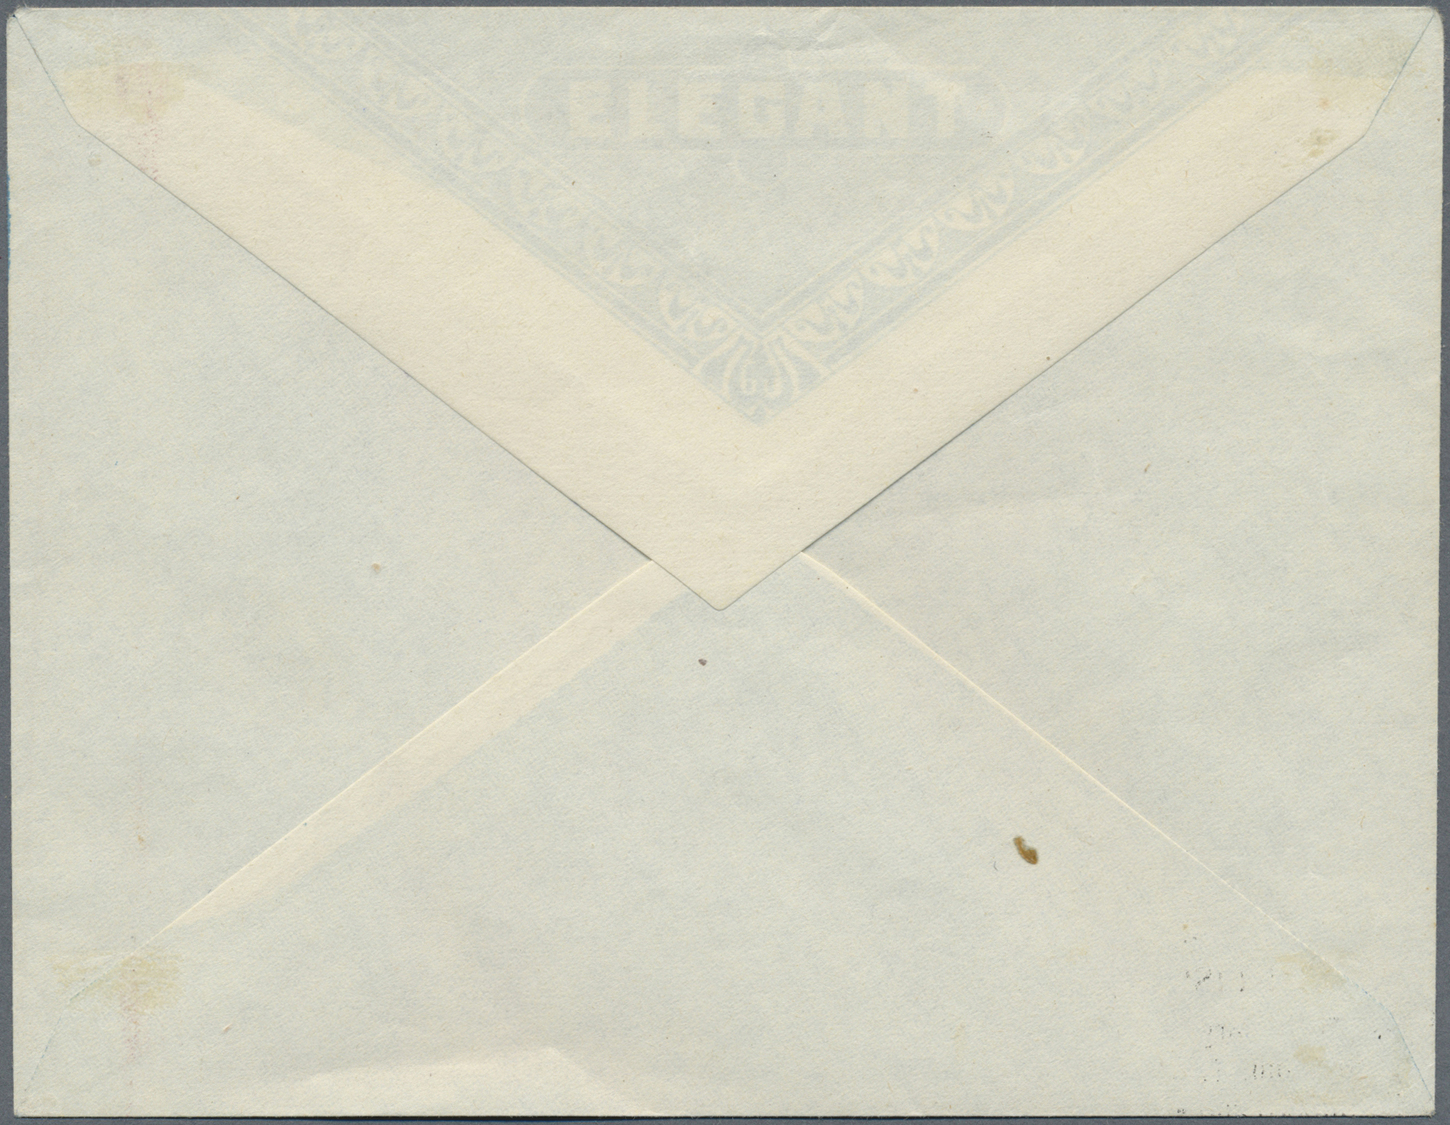 GA Albanien - Lokalausgaben: TEPELENA Military Mail, 1914, 1gr. Blue/seal, Handstamp On Envelope, Unused (hinge M - Albanie